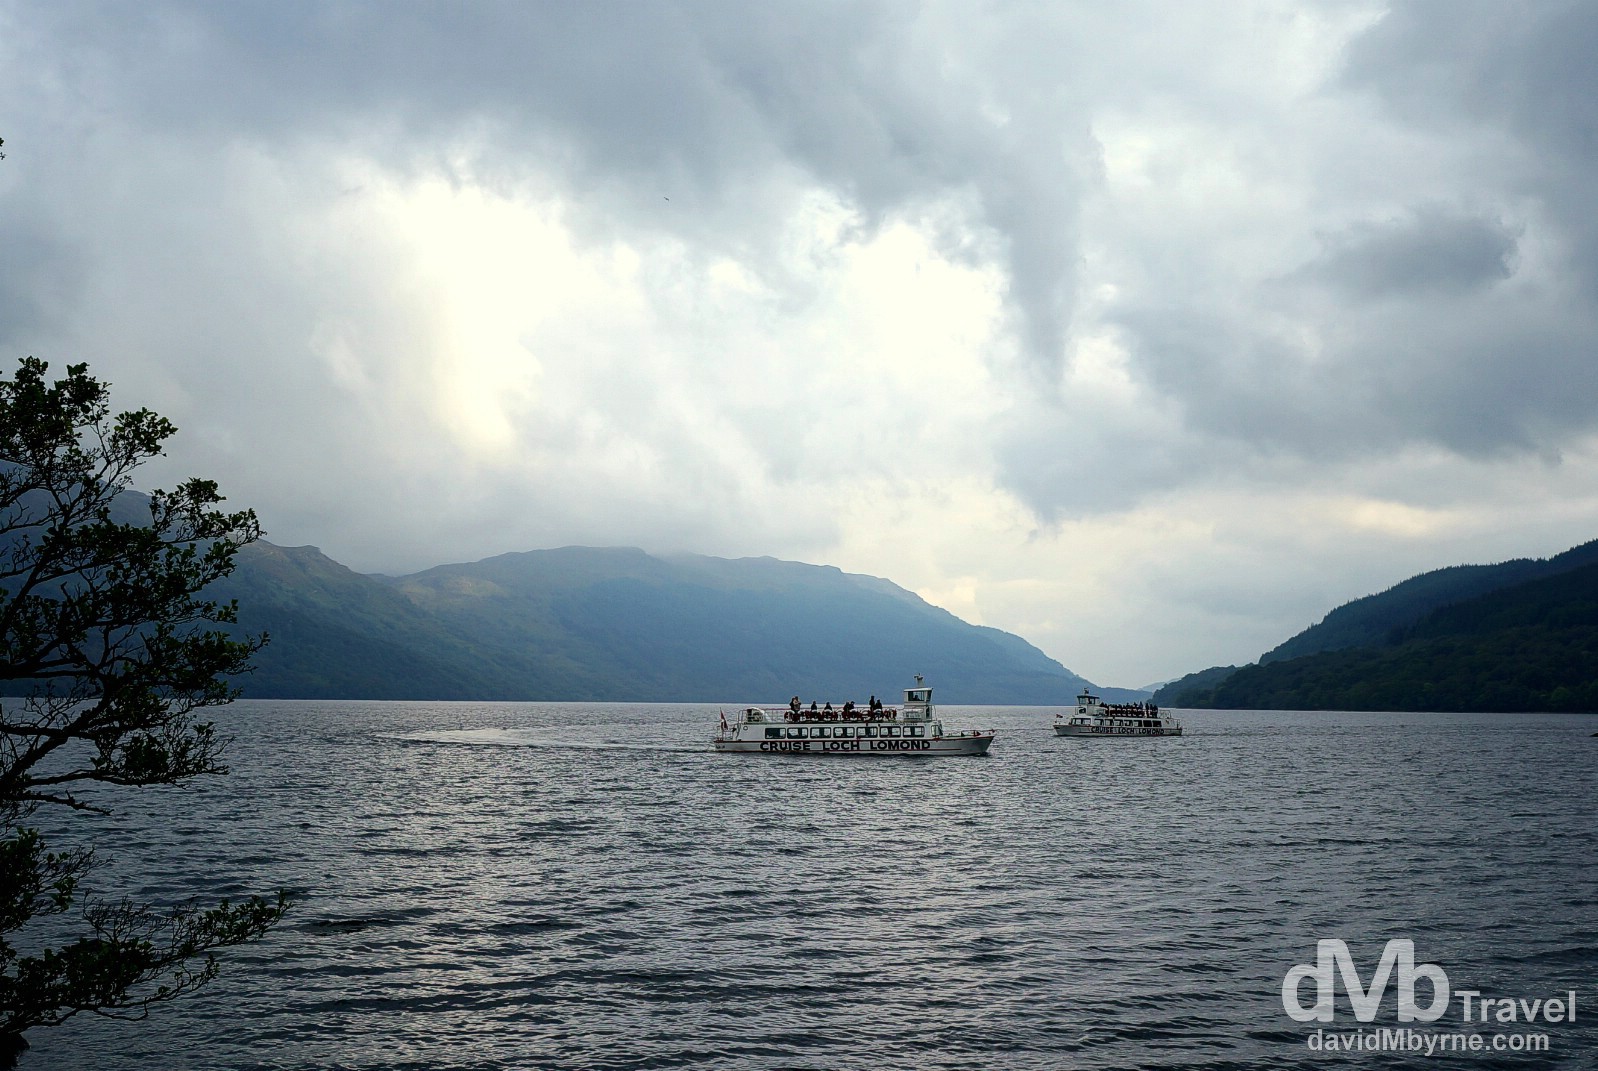 Tour boats on Lock Lomond, Scotland. September 18, 2014.